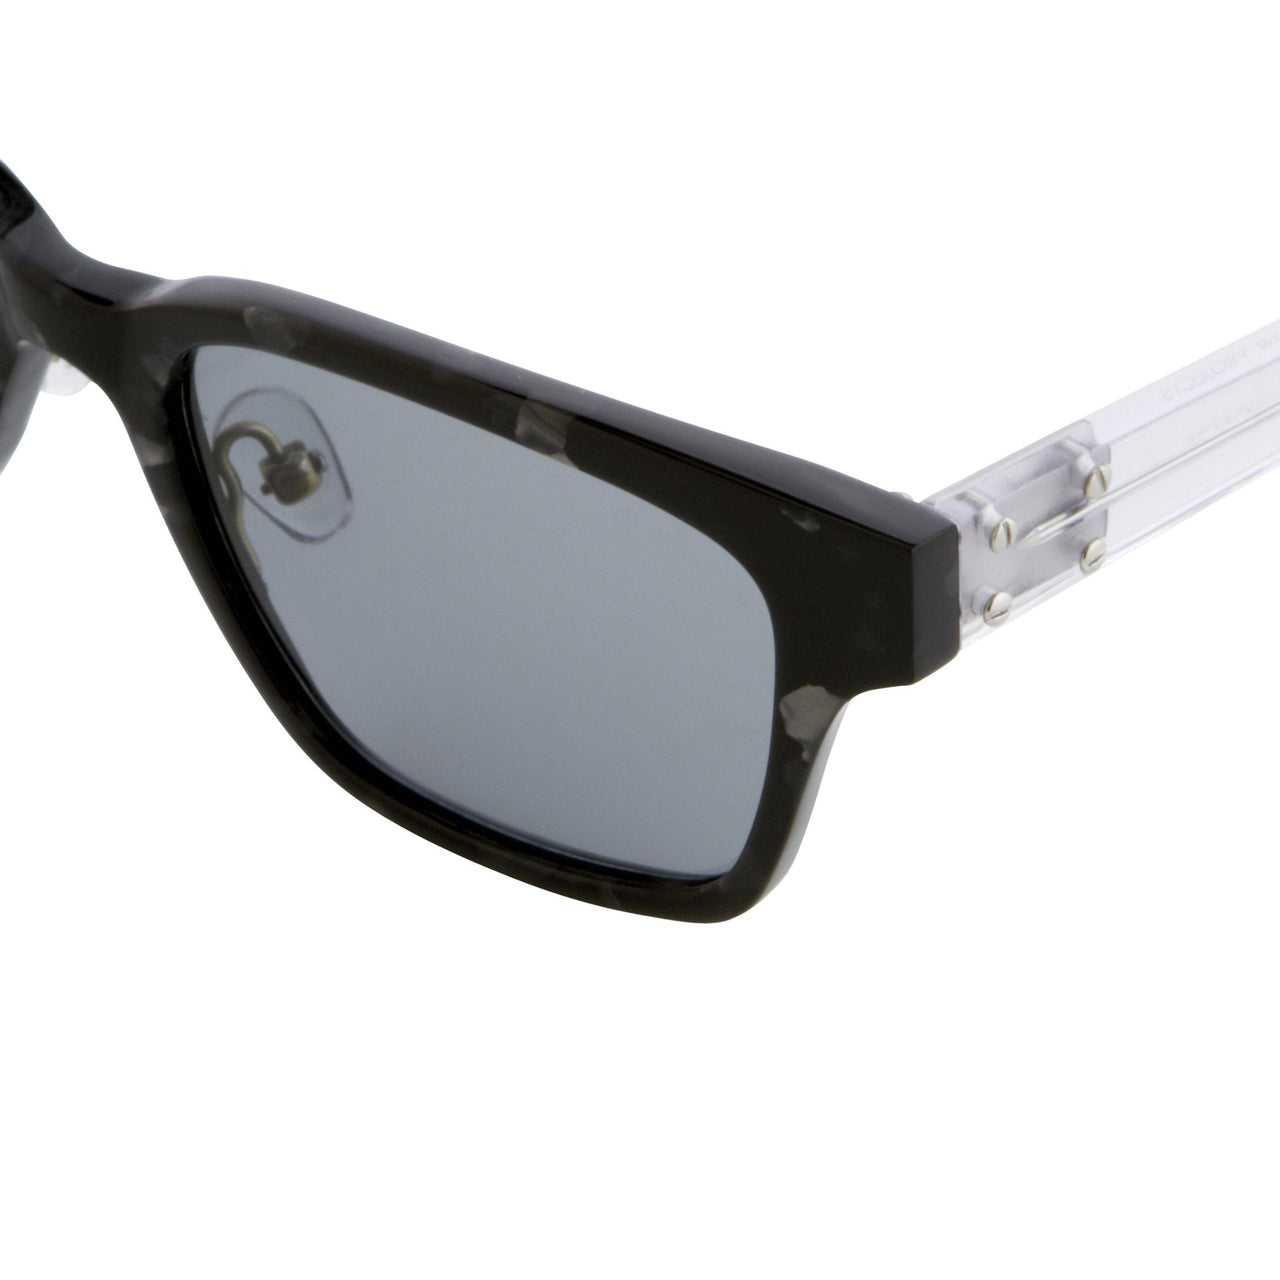 Kris Van Assche Sunglasses with Rectangular Grey Tortoise Shell and Grey Lenses - KVA18C2SUN - Watches & Crystals